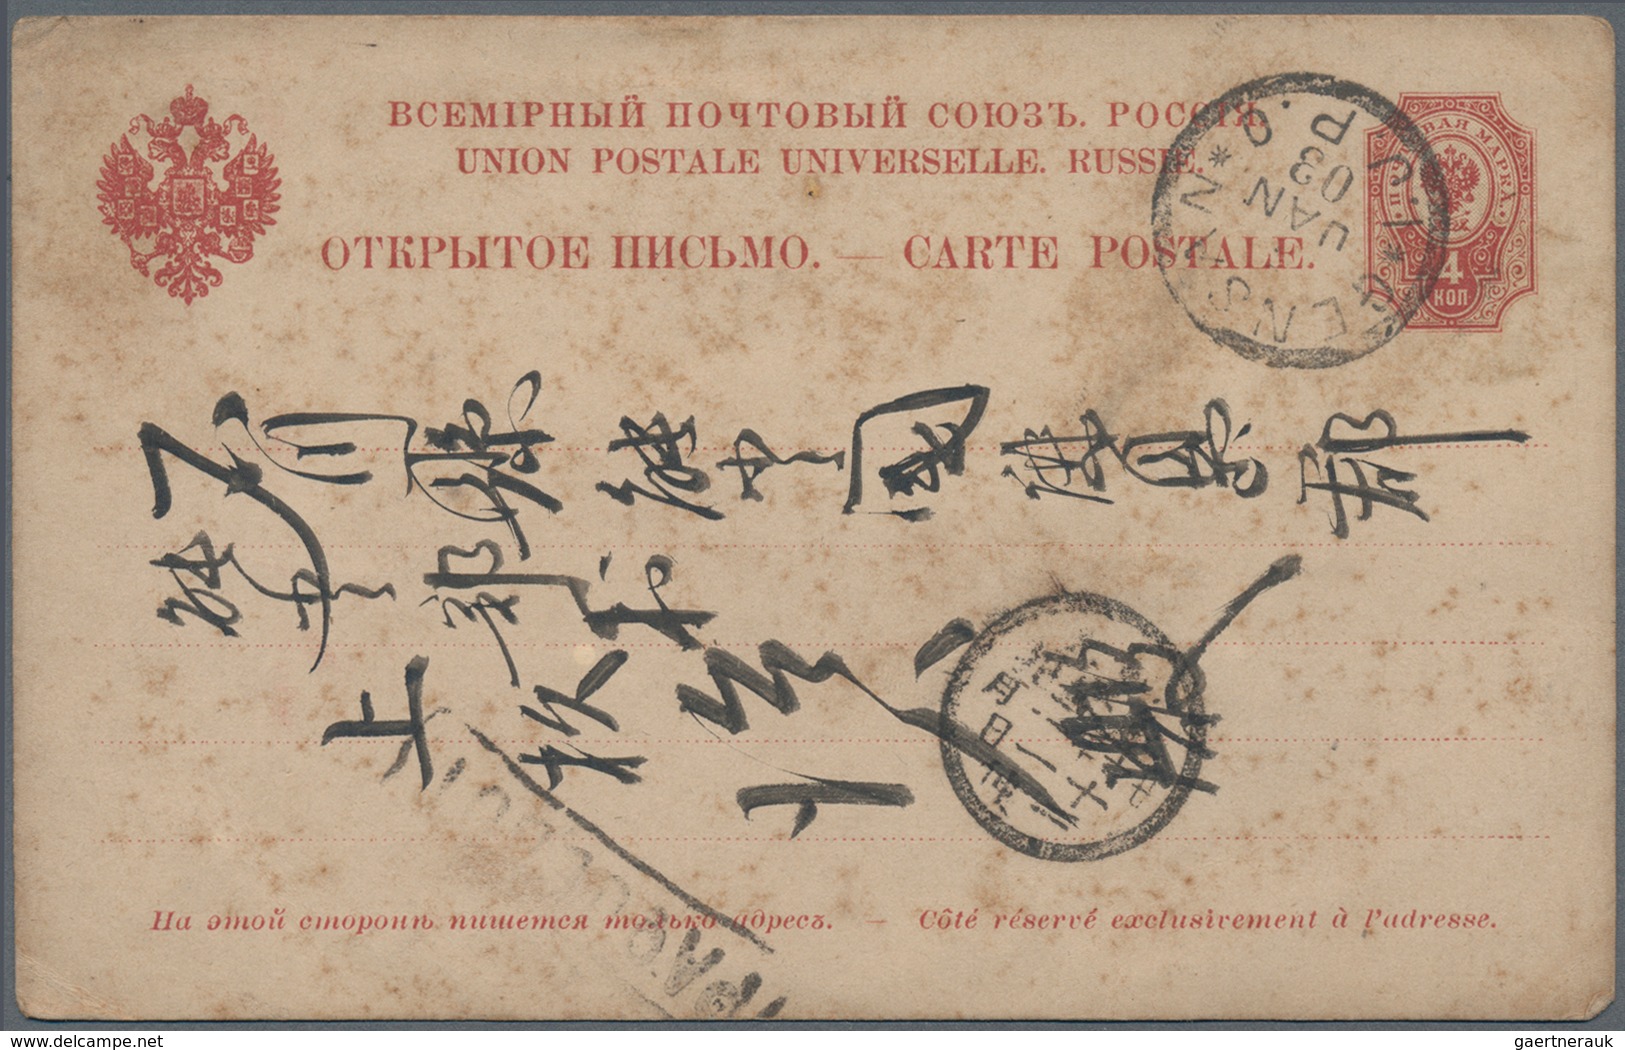 Japanische Post In Korea: 1903. Russia 4k Entire Card Canceled "GENSAN I.J. P.O JAN 03" Cds In Assoc - Militärpostmarken